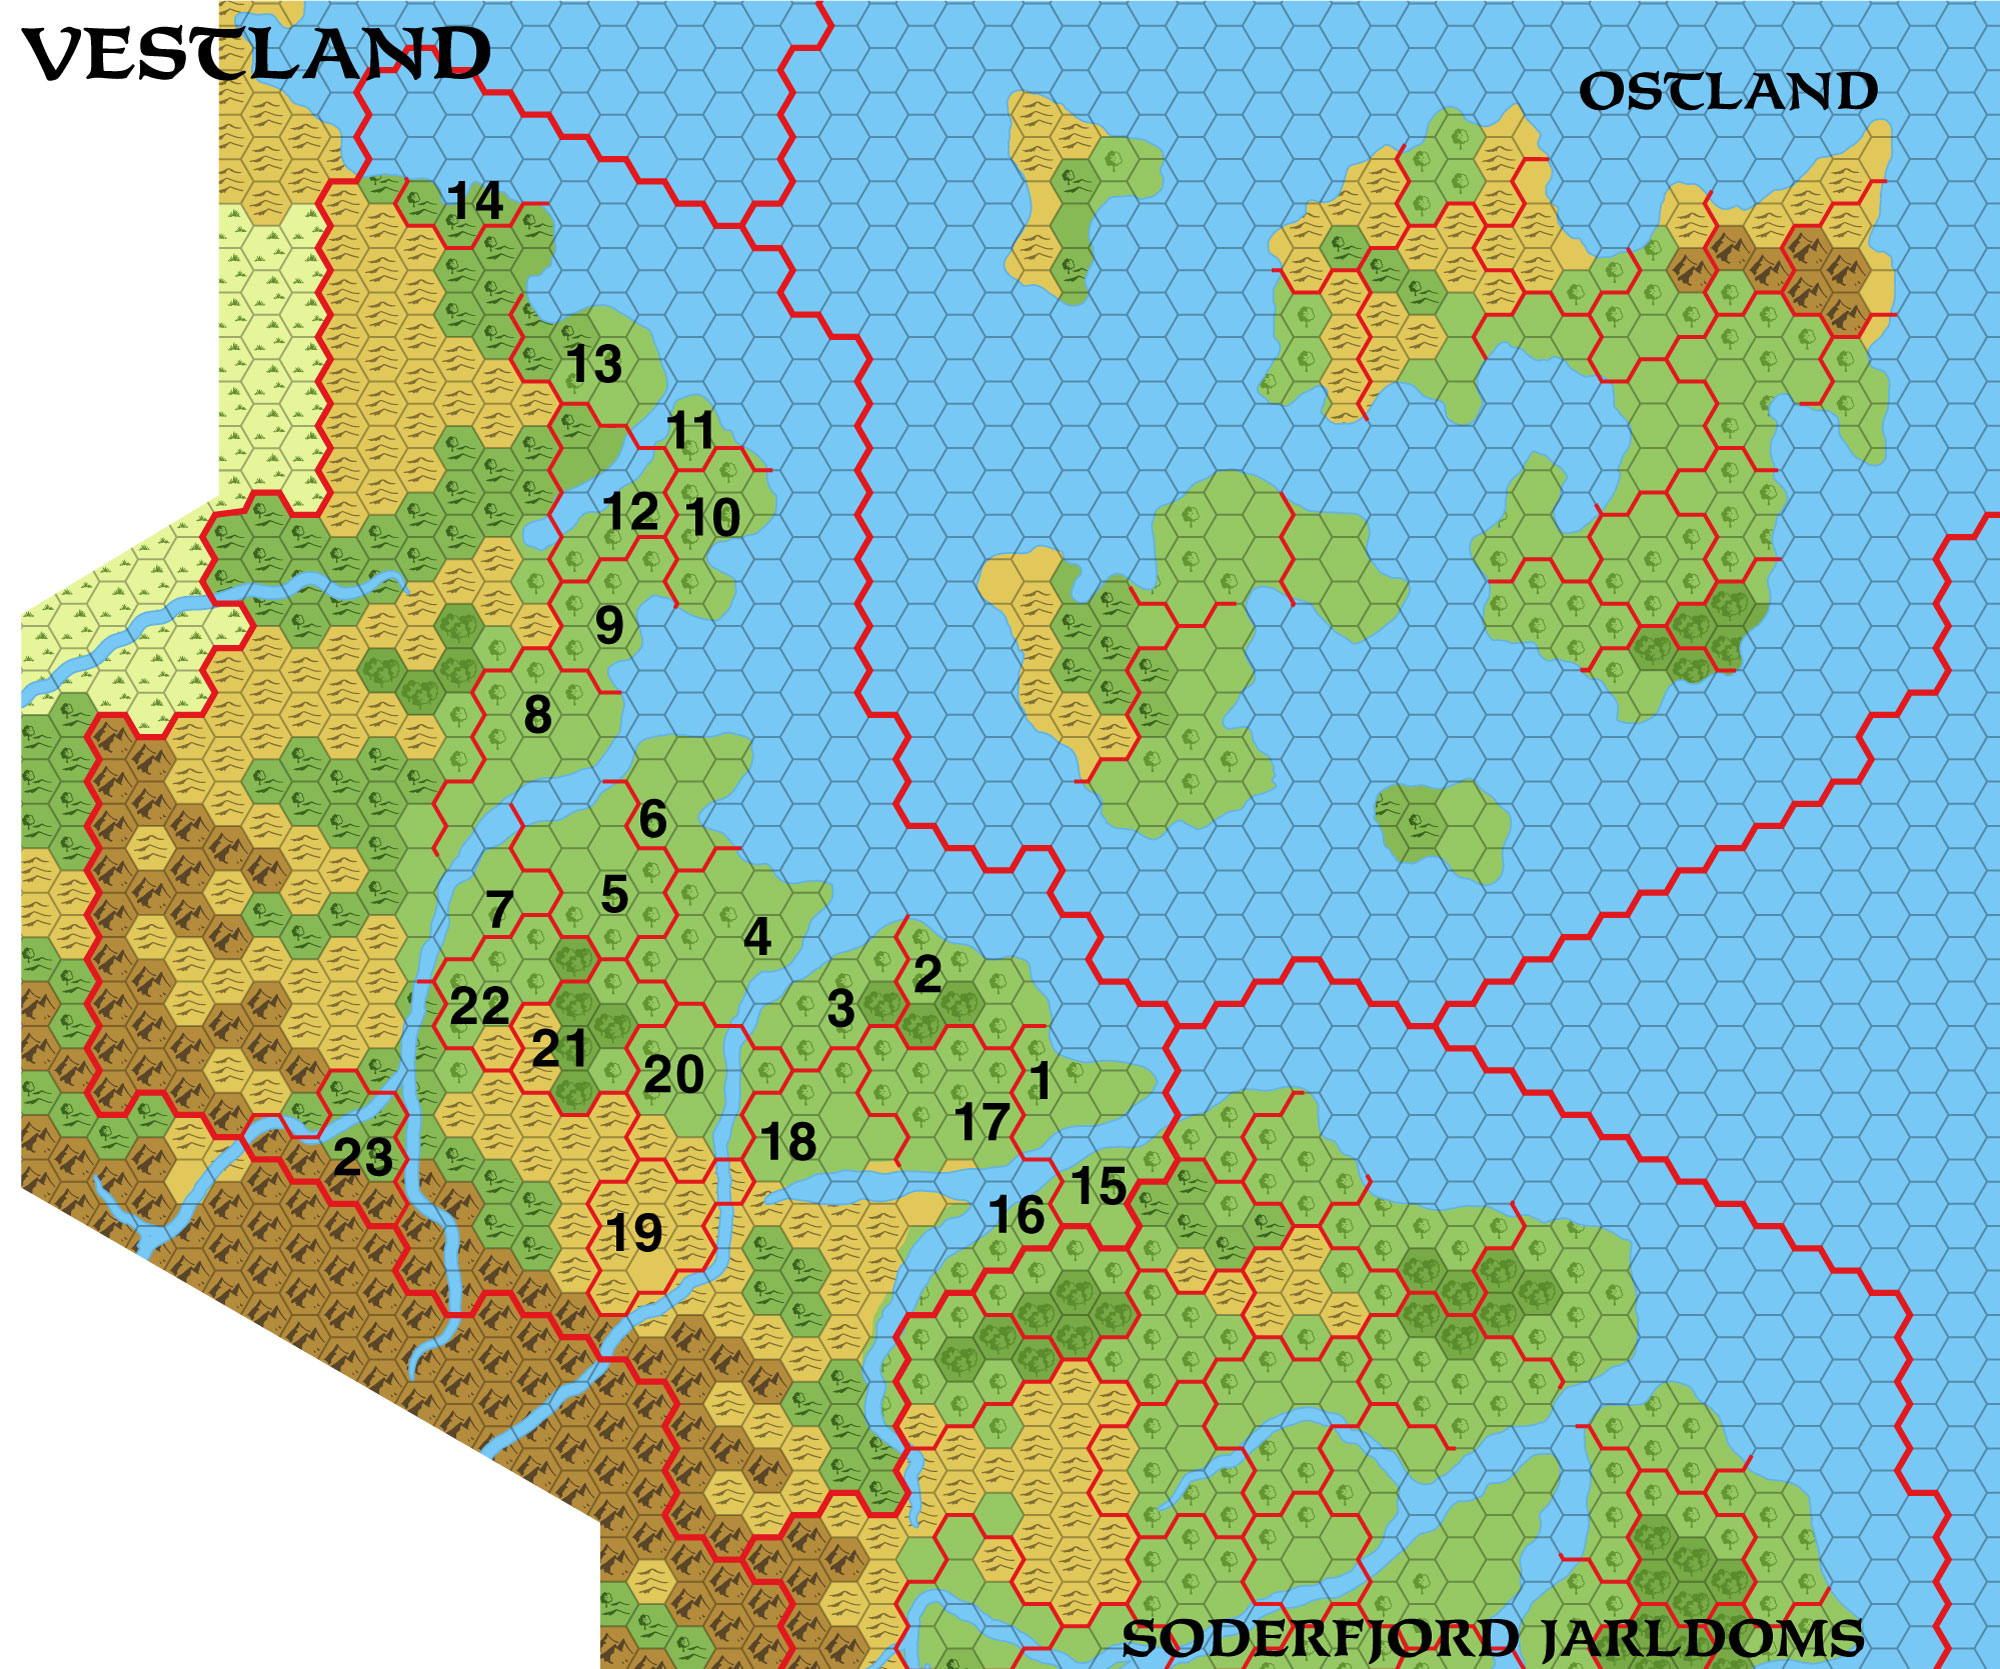 Colourised replica of GAZ7’s overview map of Vestland, 8 miles per hex